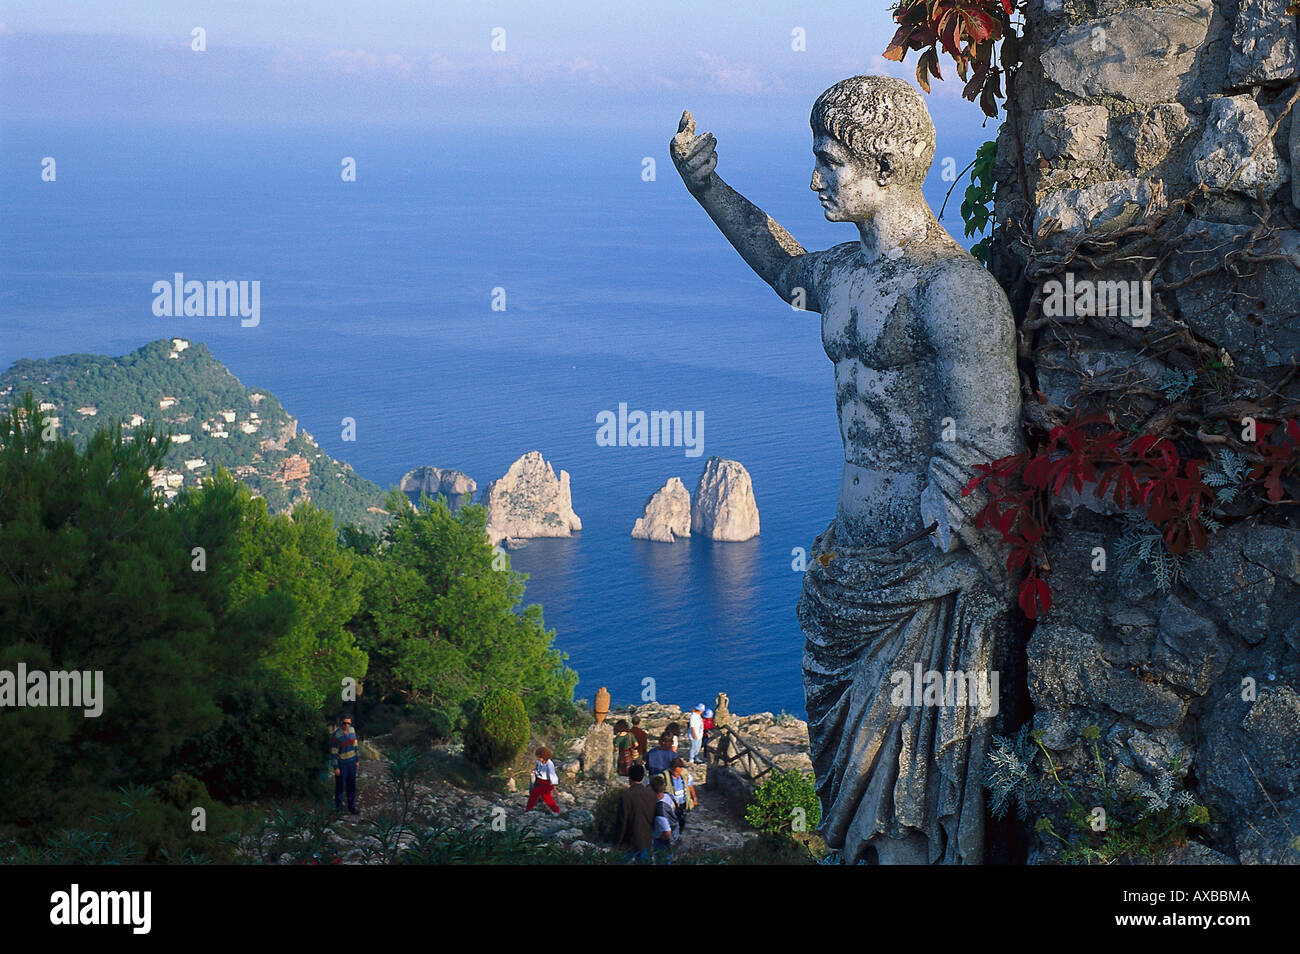 Weathered stone figure and group of tourists at the coast, Monte Solaro, Faraglioni, Capri, Italy, Europe Stock Photo